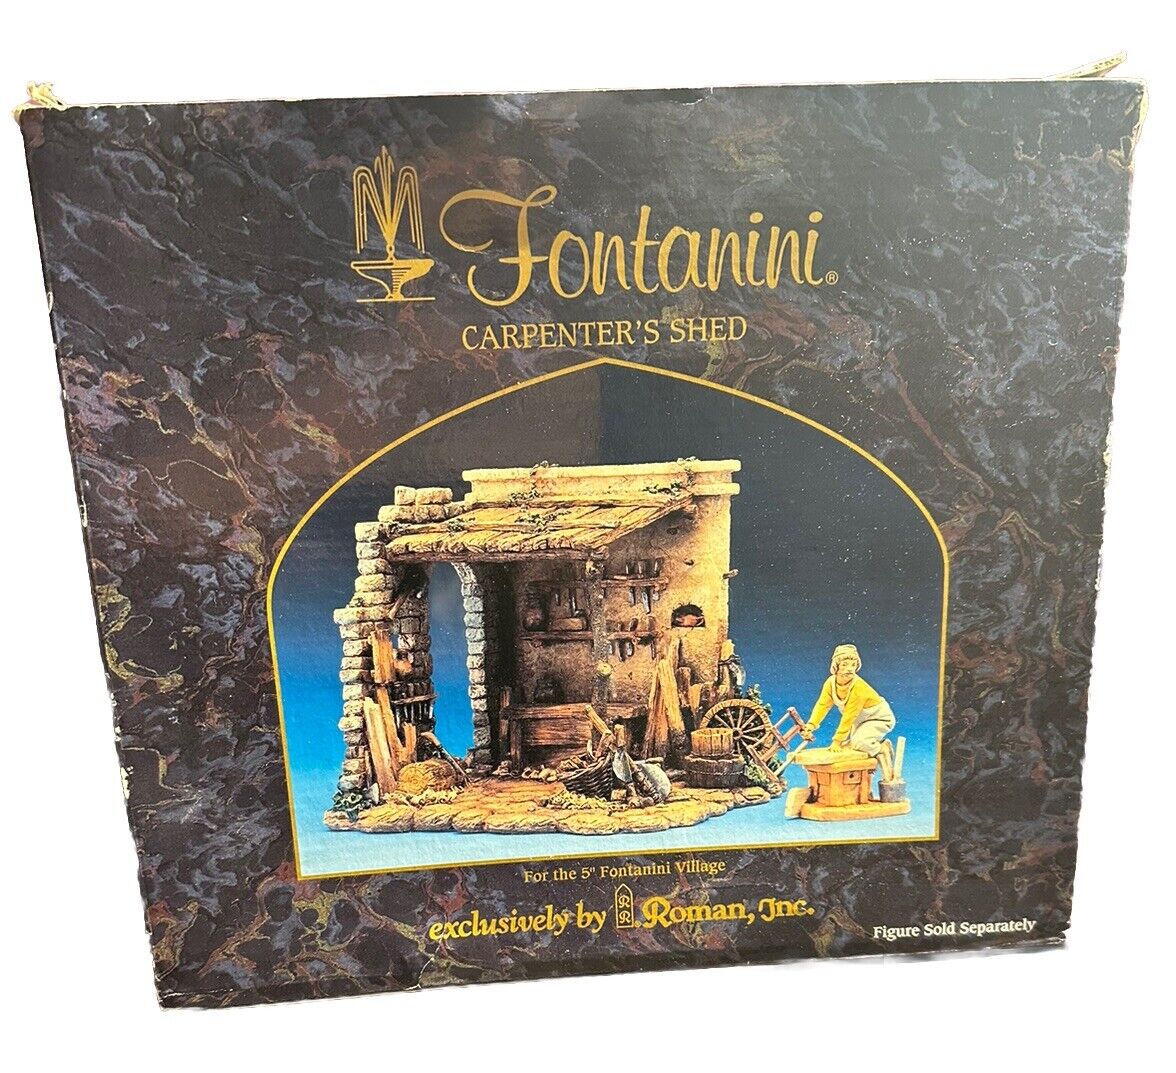 Fontanini Roman Inc - The Carpenter’s Shed - Nativity Scene Building - #50509 